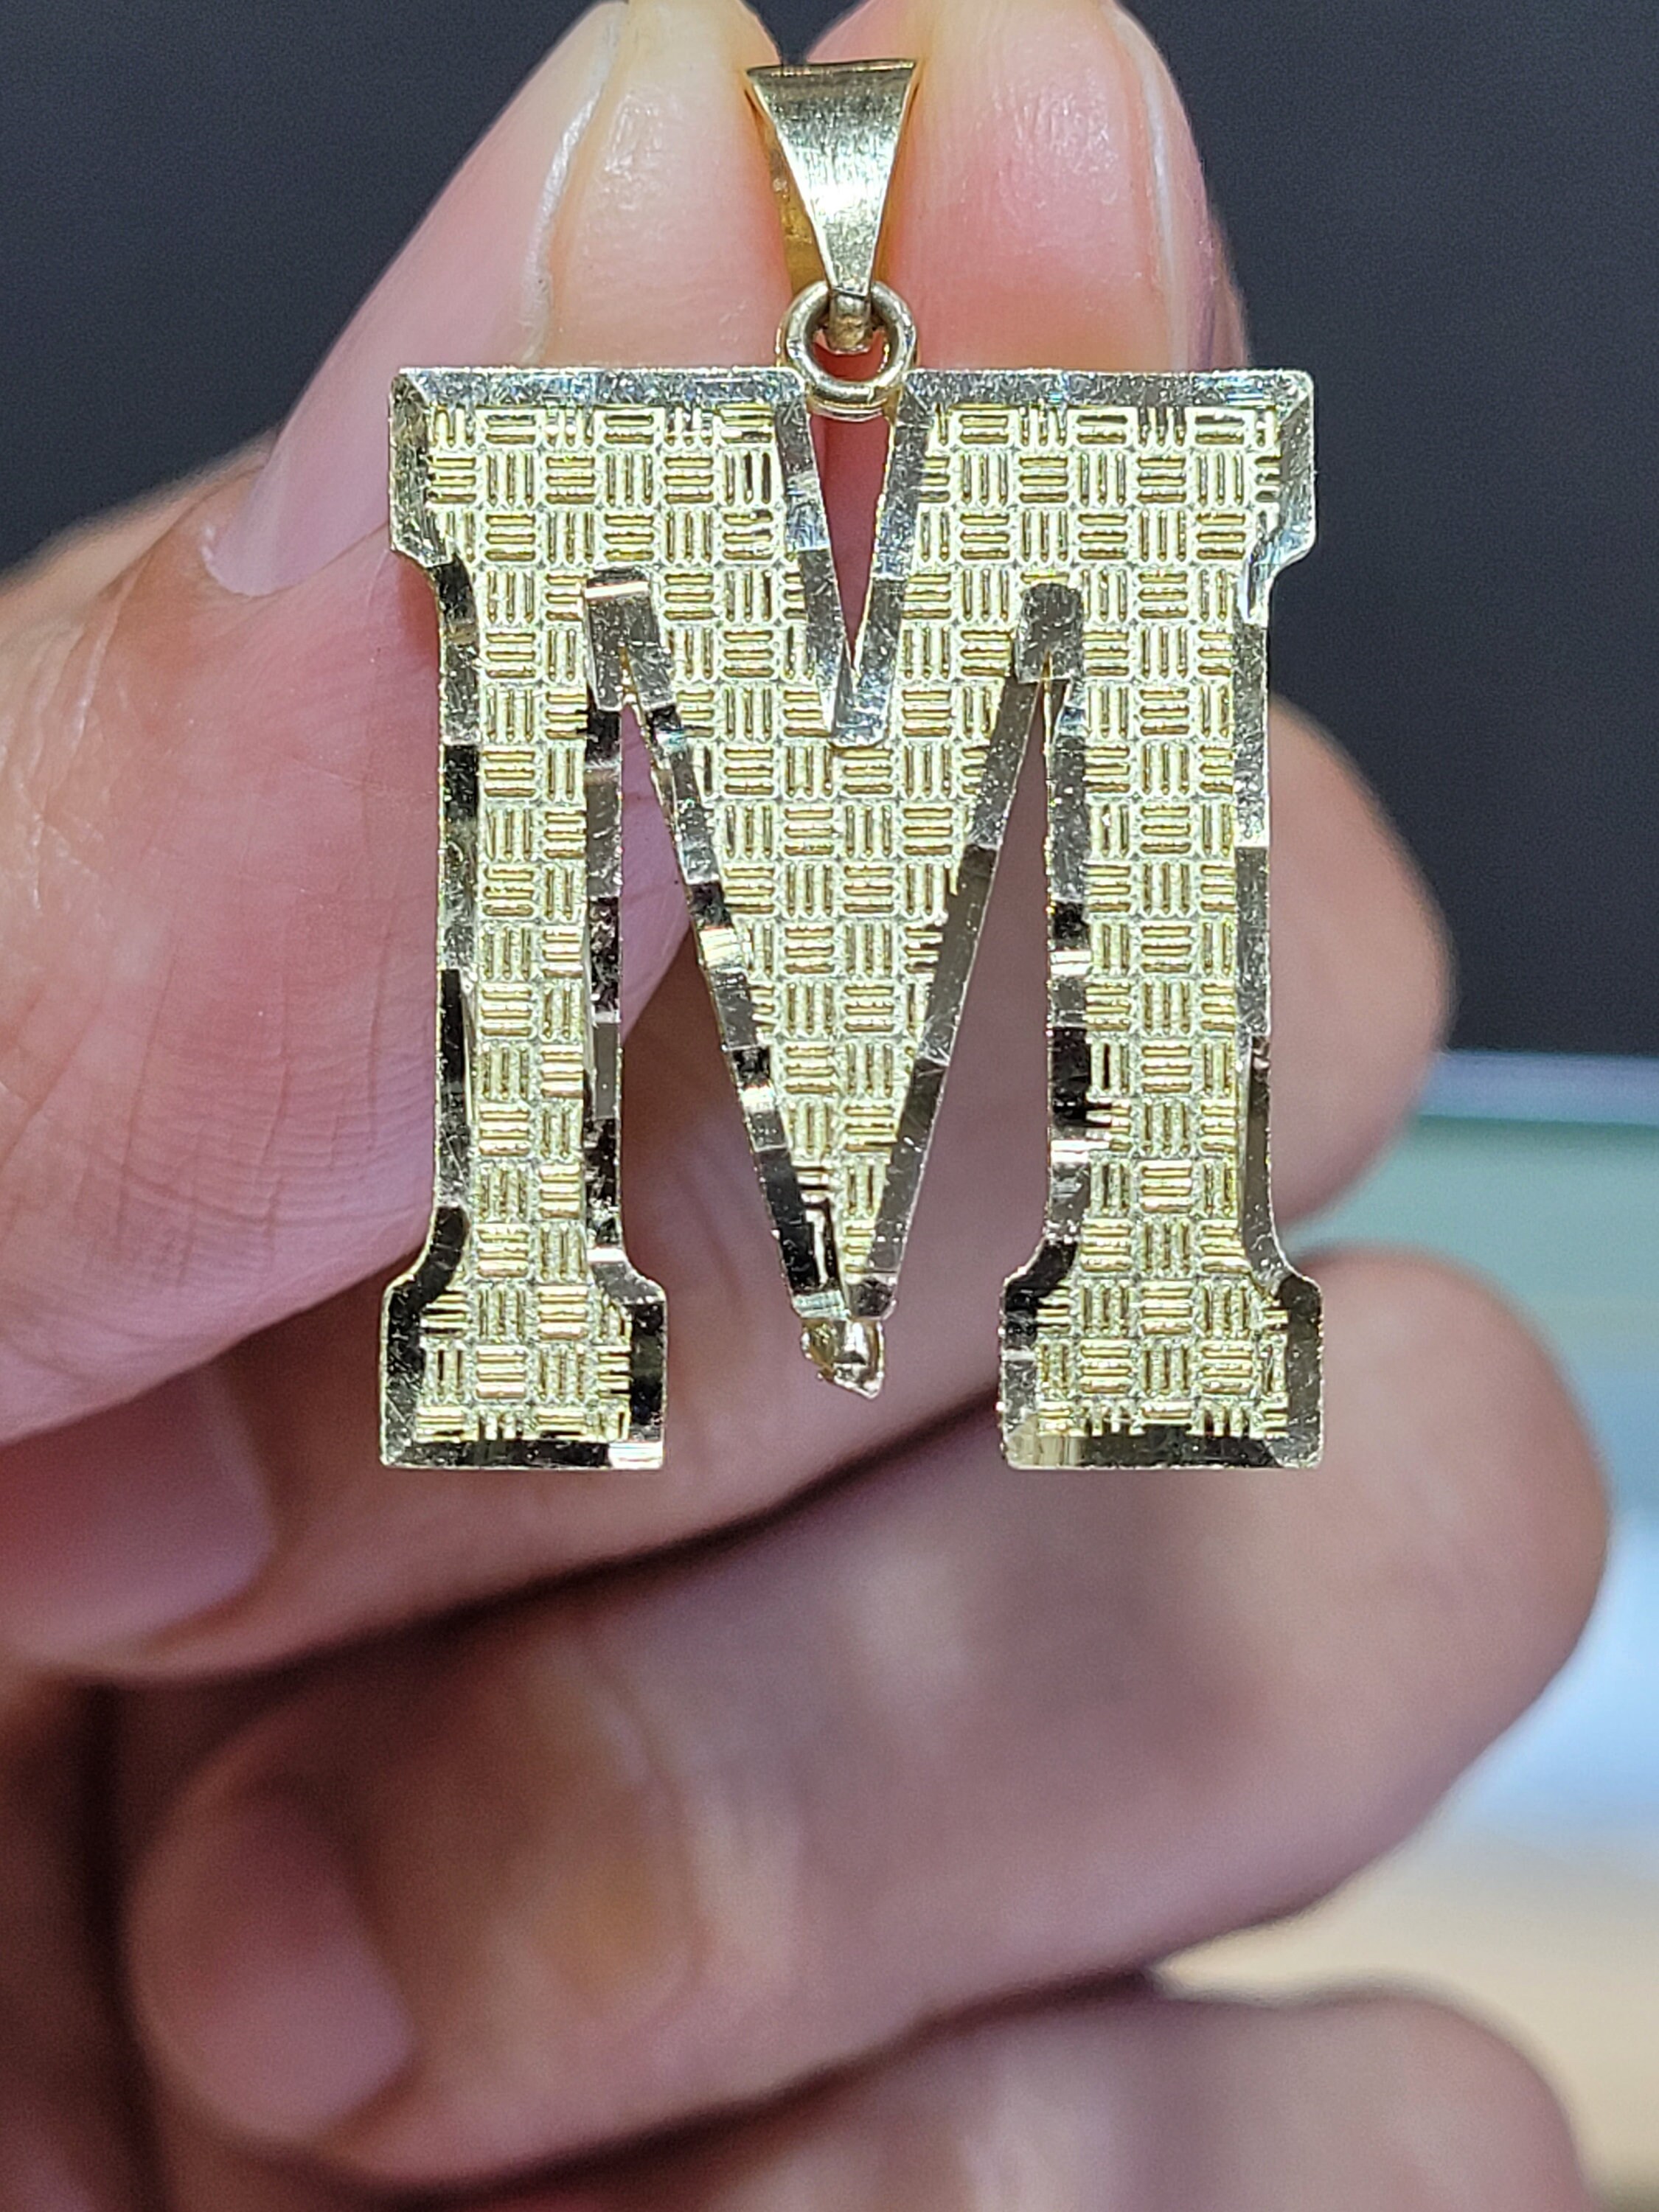 9ct Gold Two Tone 22mm Diamond-cut Initial M Circle Pendant